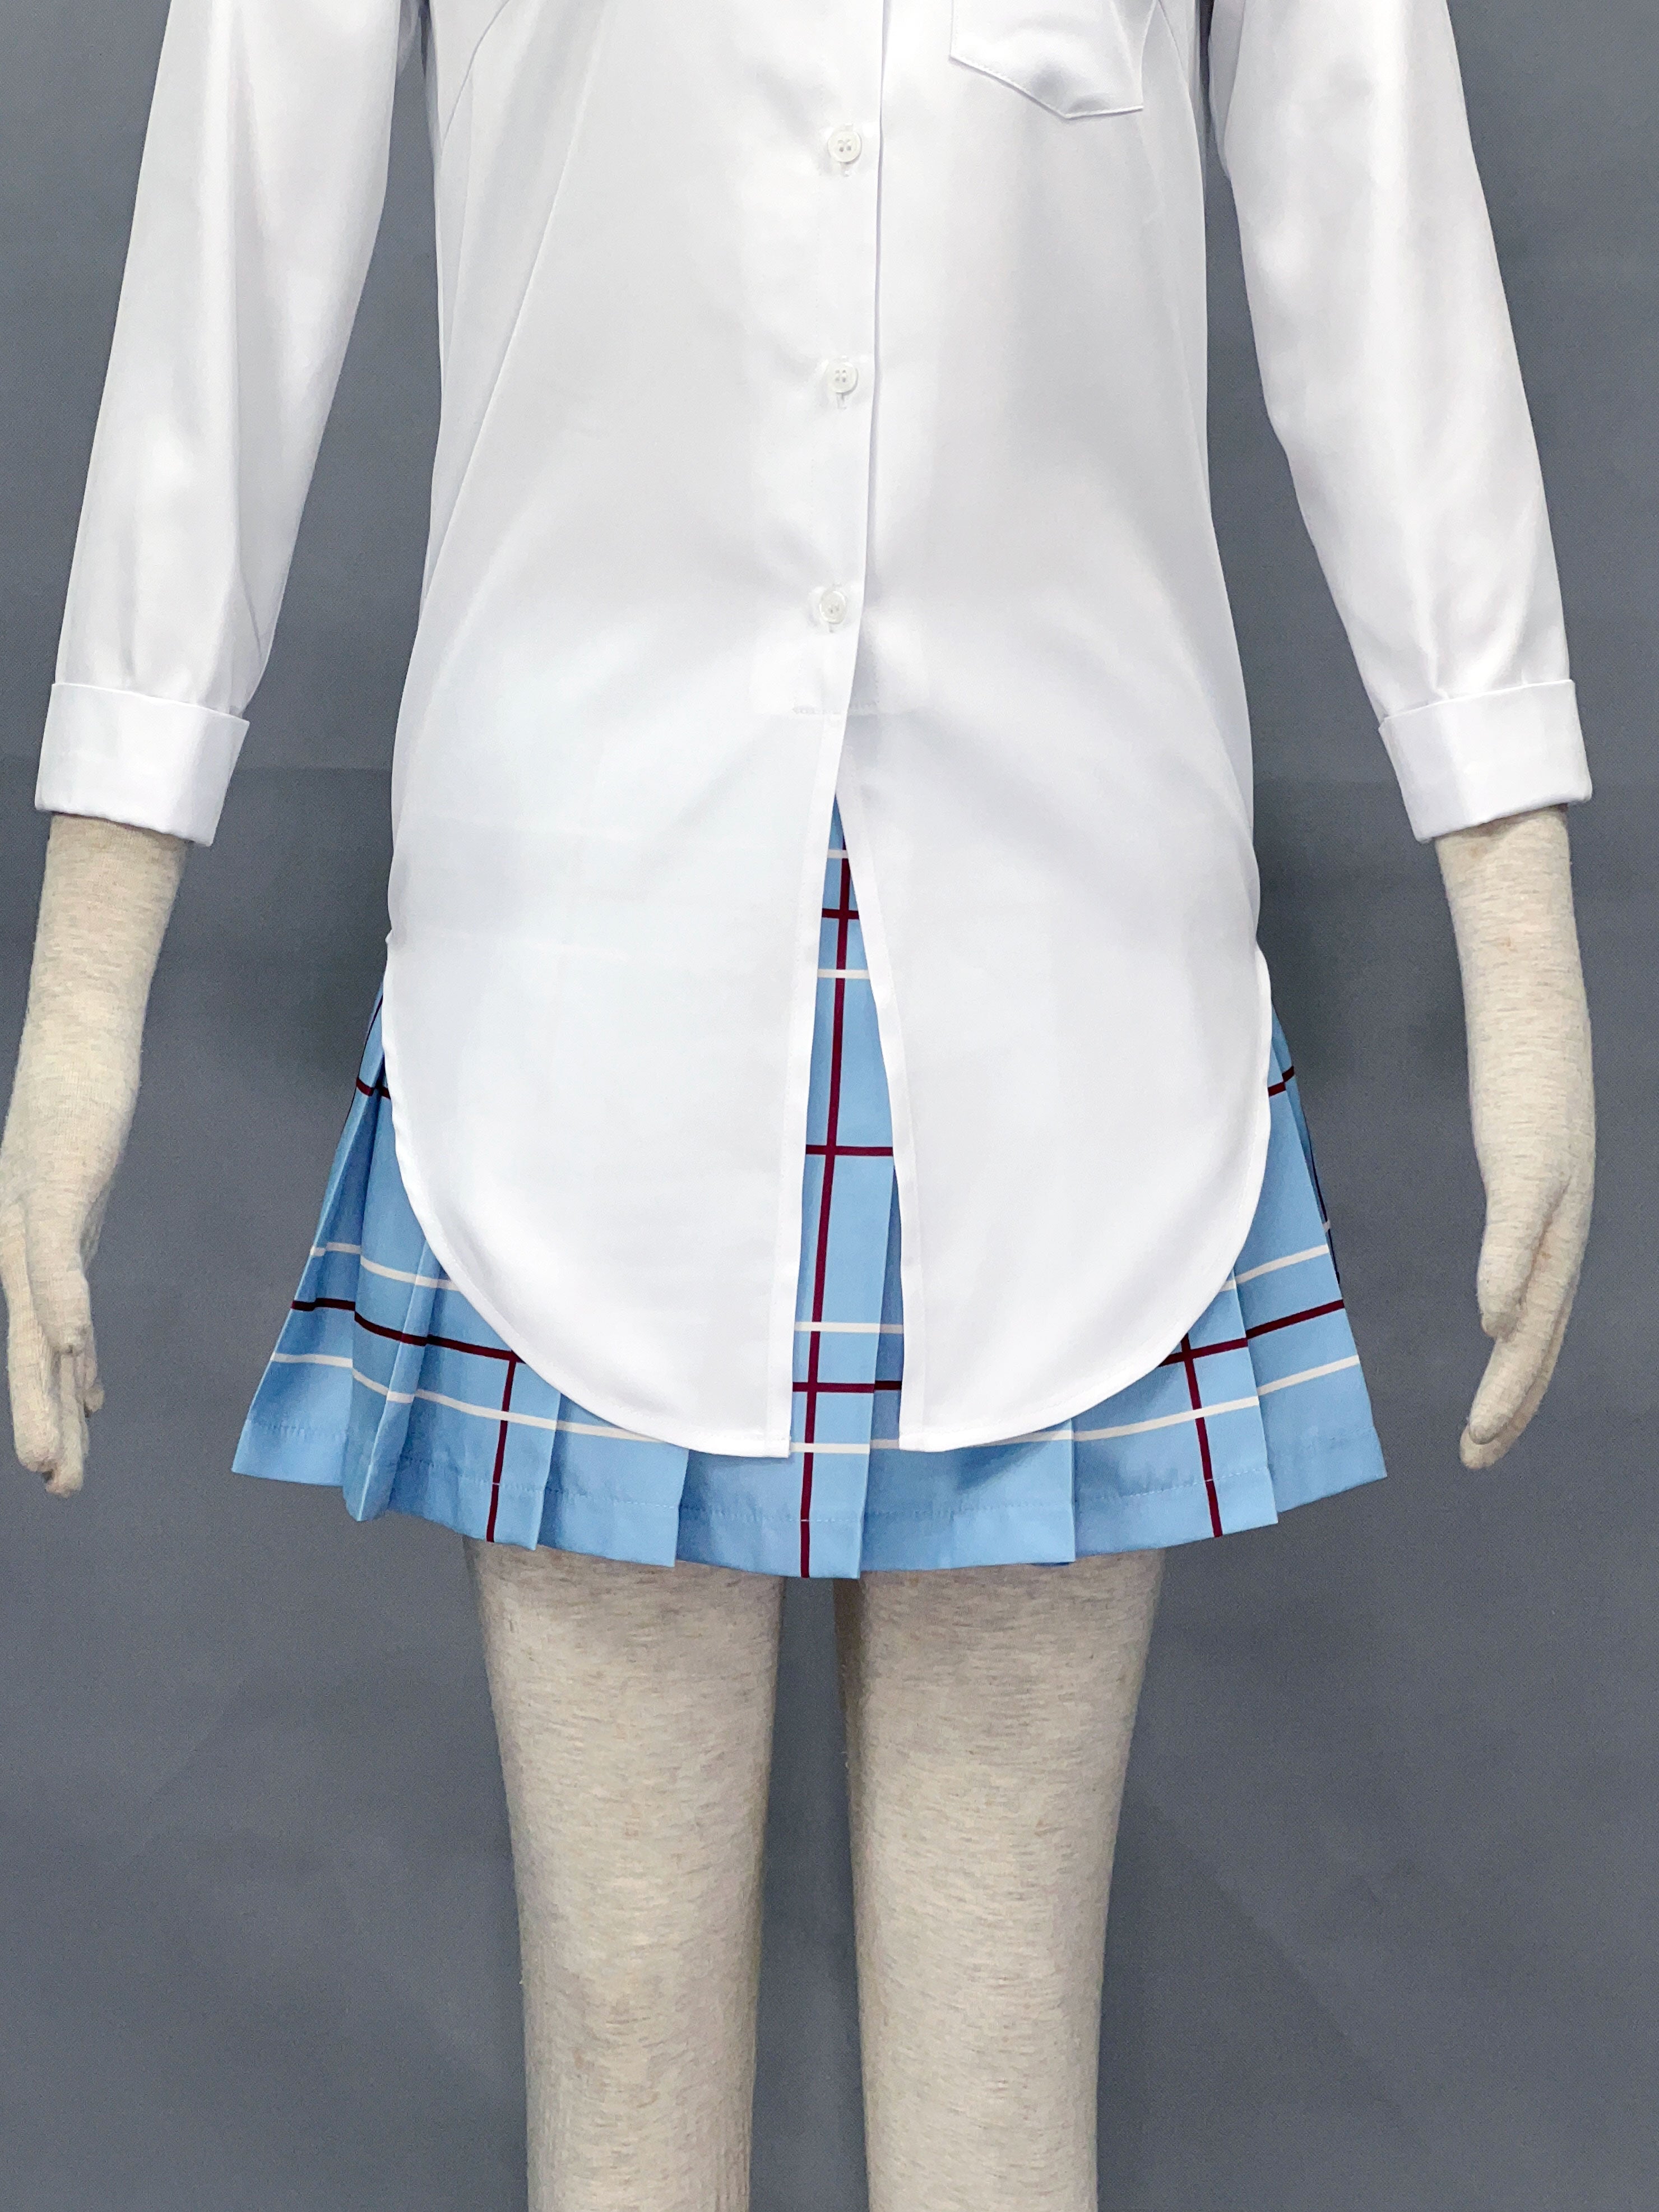 My Dress-Up Darling Kitagawa Marin Women's School Uniform - Spring Cosplay Costume C01064